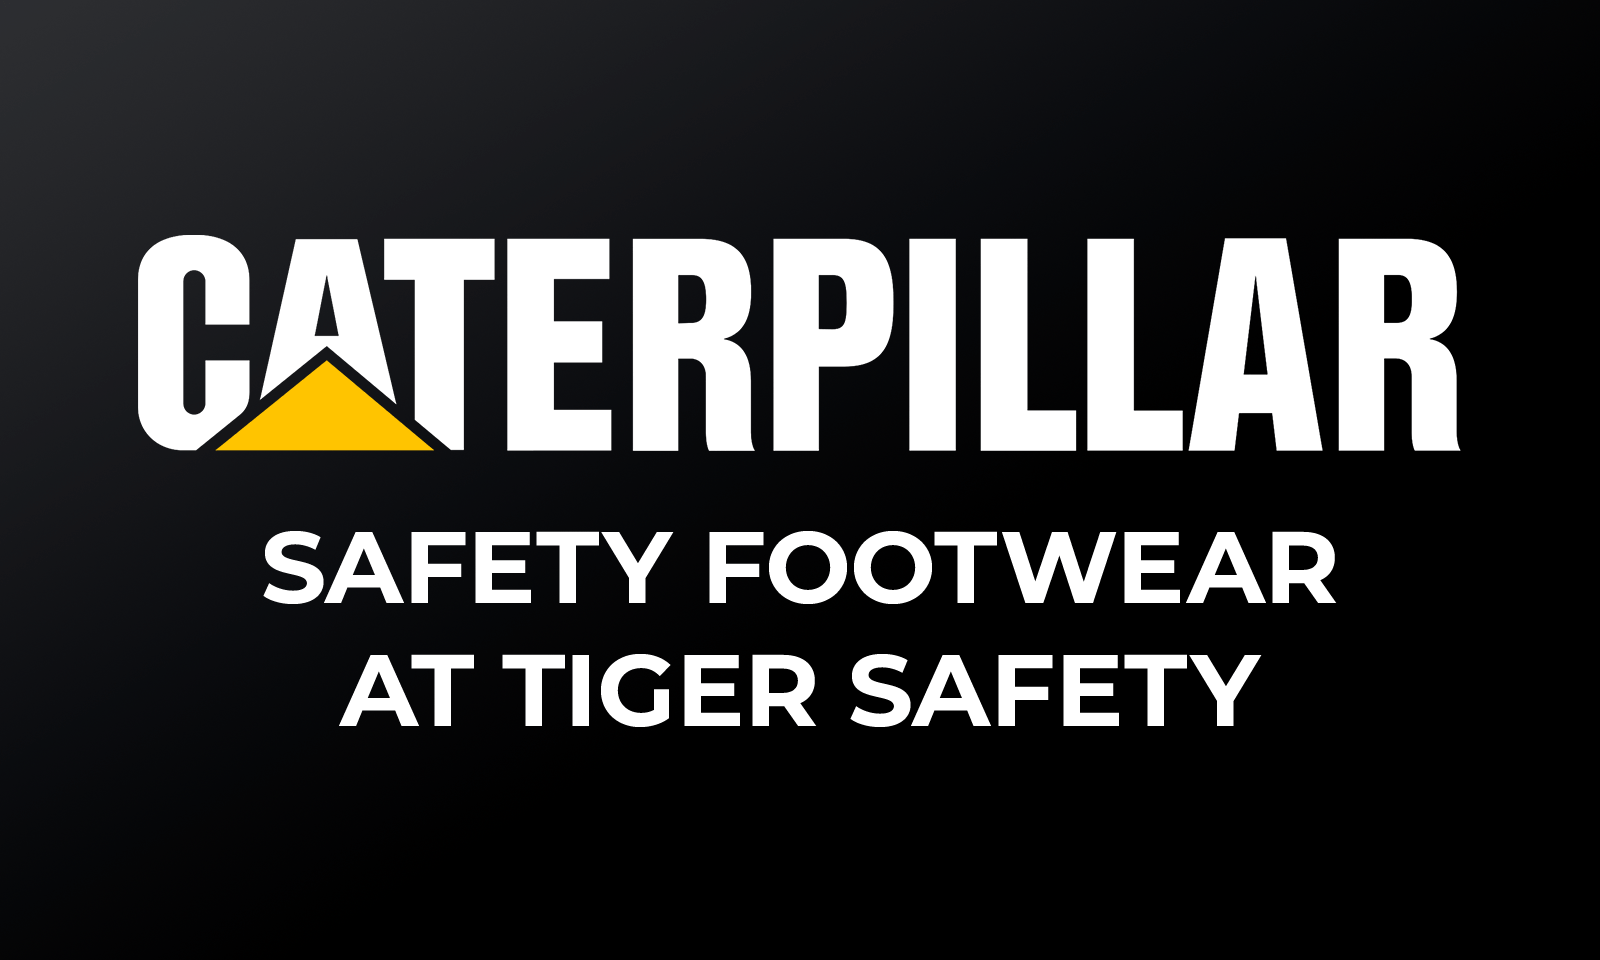 Caterpillar Safety Footwear at Tiger Safety